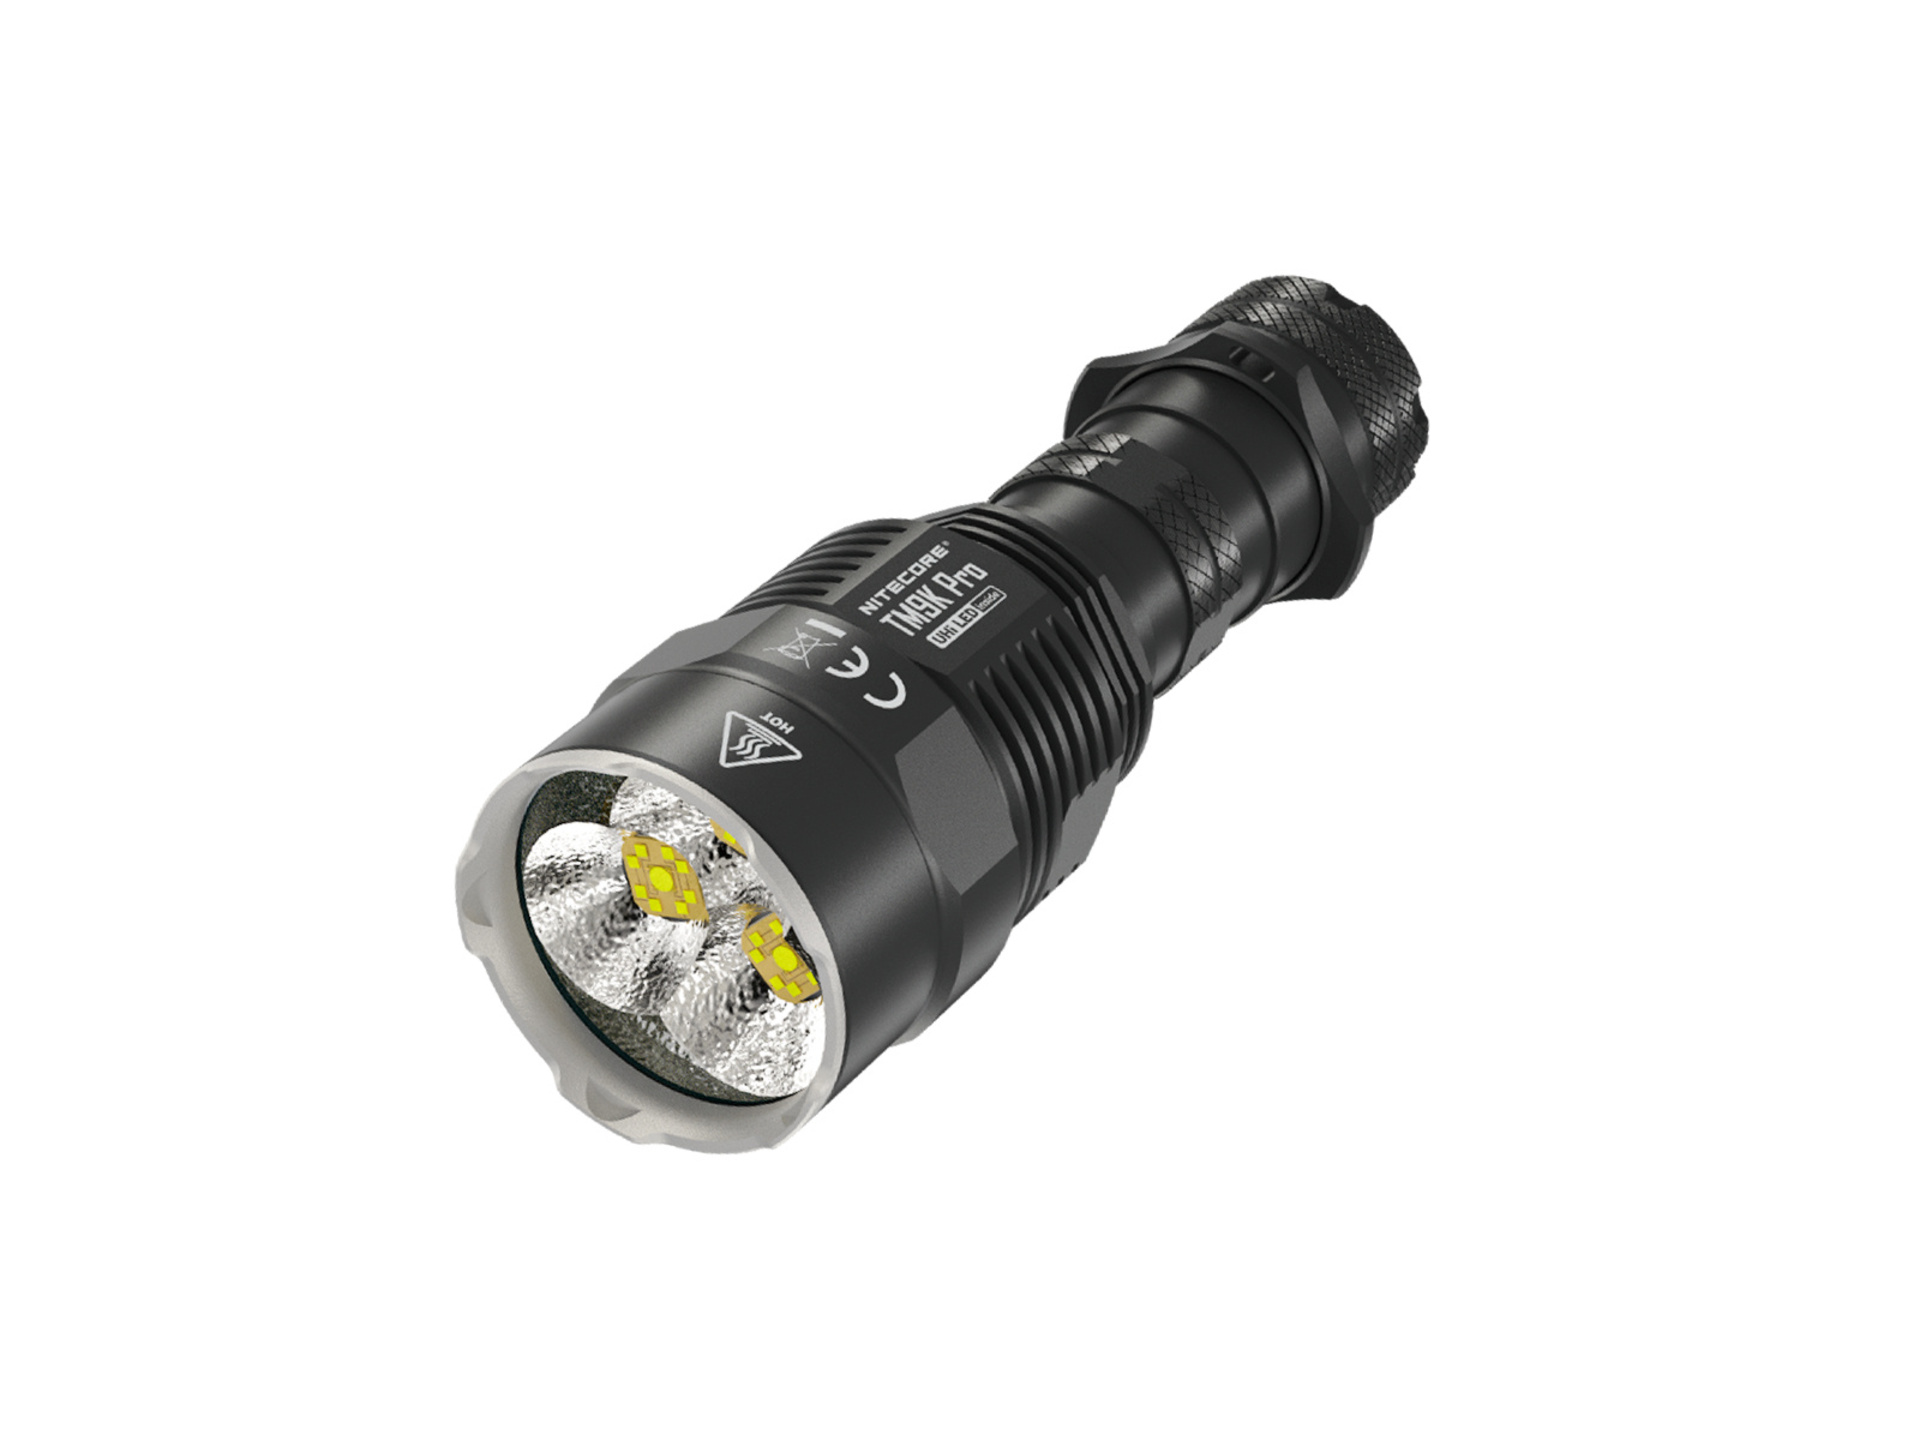 Nitecore TM9K Pro Flashlight